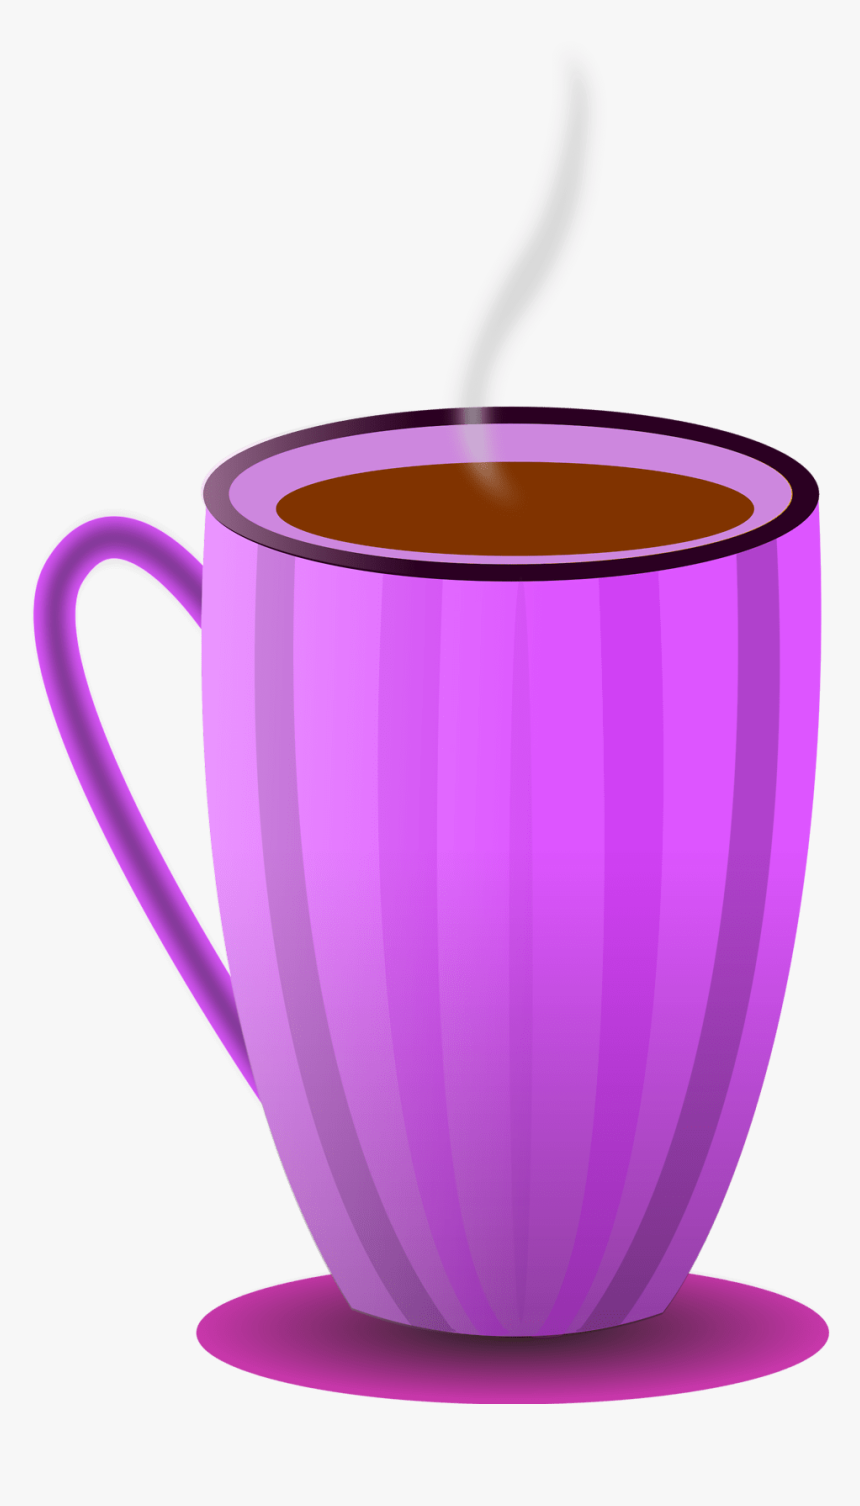 Free Clip Art Coffee Mug - Hot Mug Of Coffee Clipart, HD Png Download, Free Download